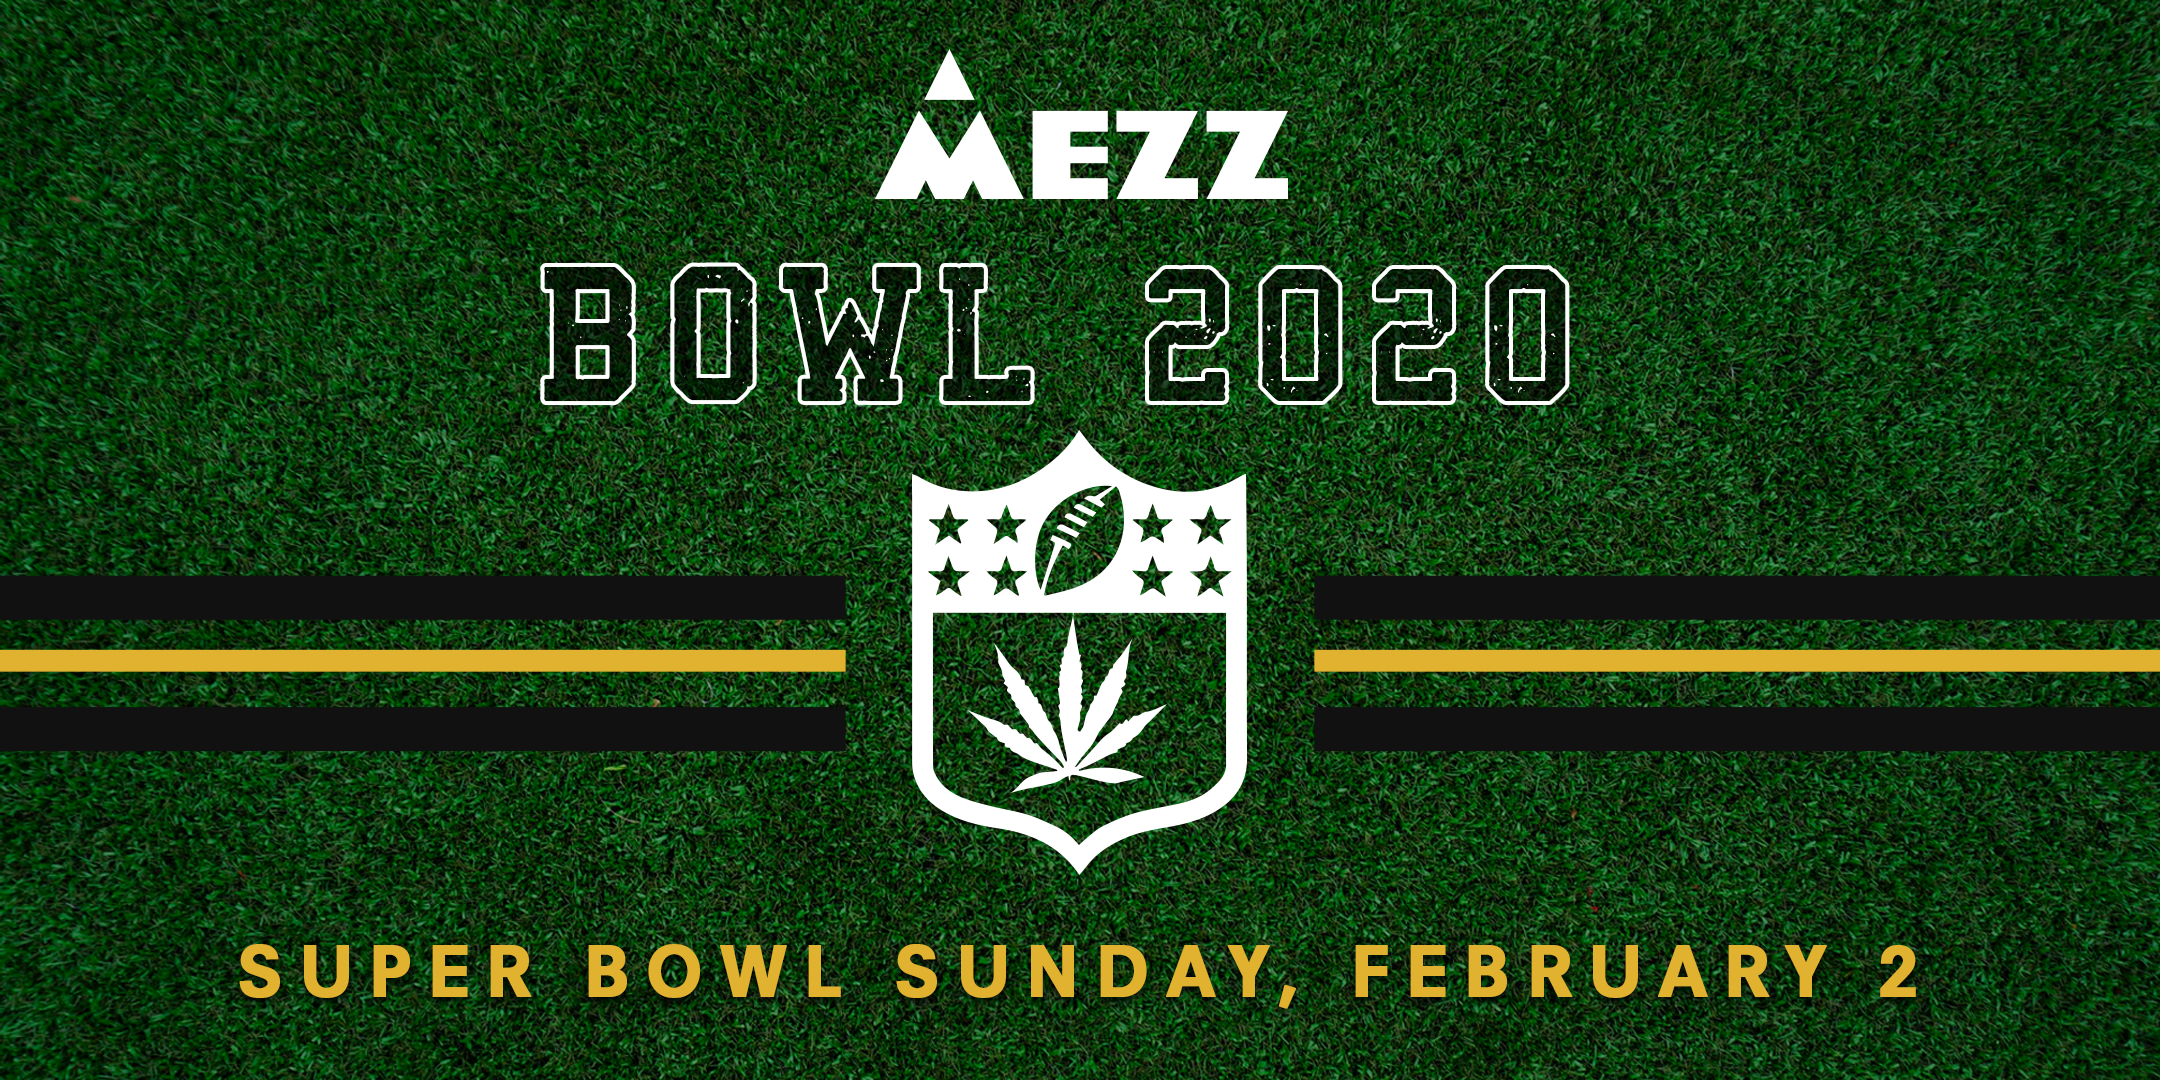 Mezz Bowl 2020